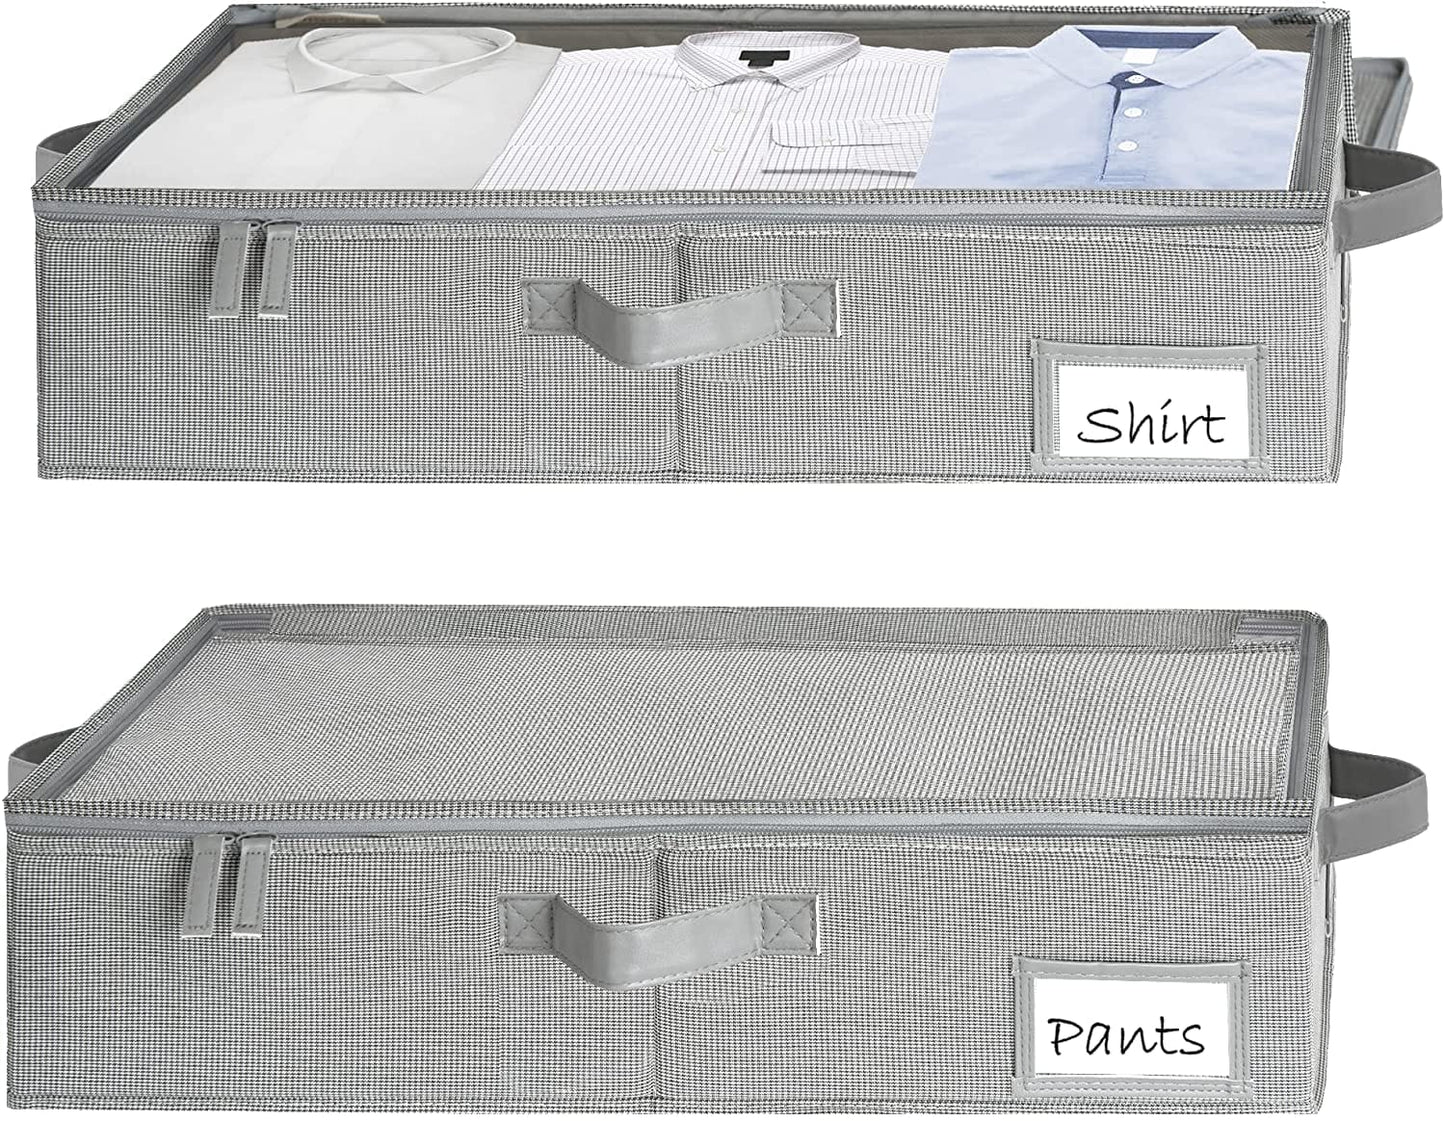 【LA000172】Multi-functional collapsible underwear, socks, clothing small items organizer portable 2 pack zipper storage box